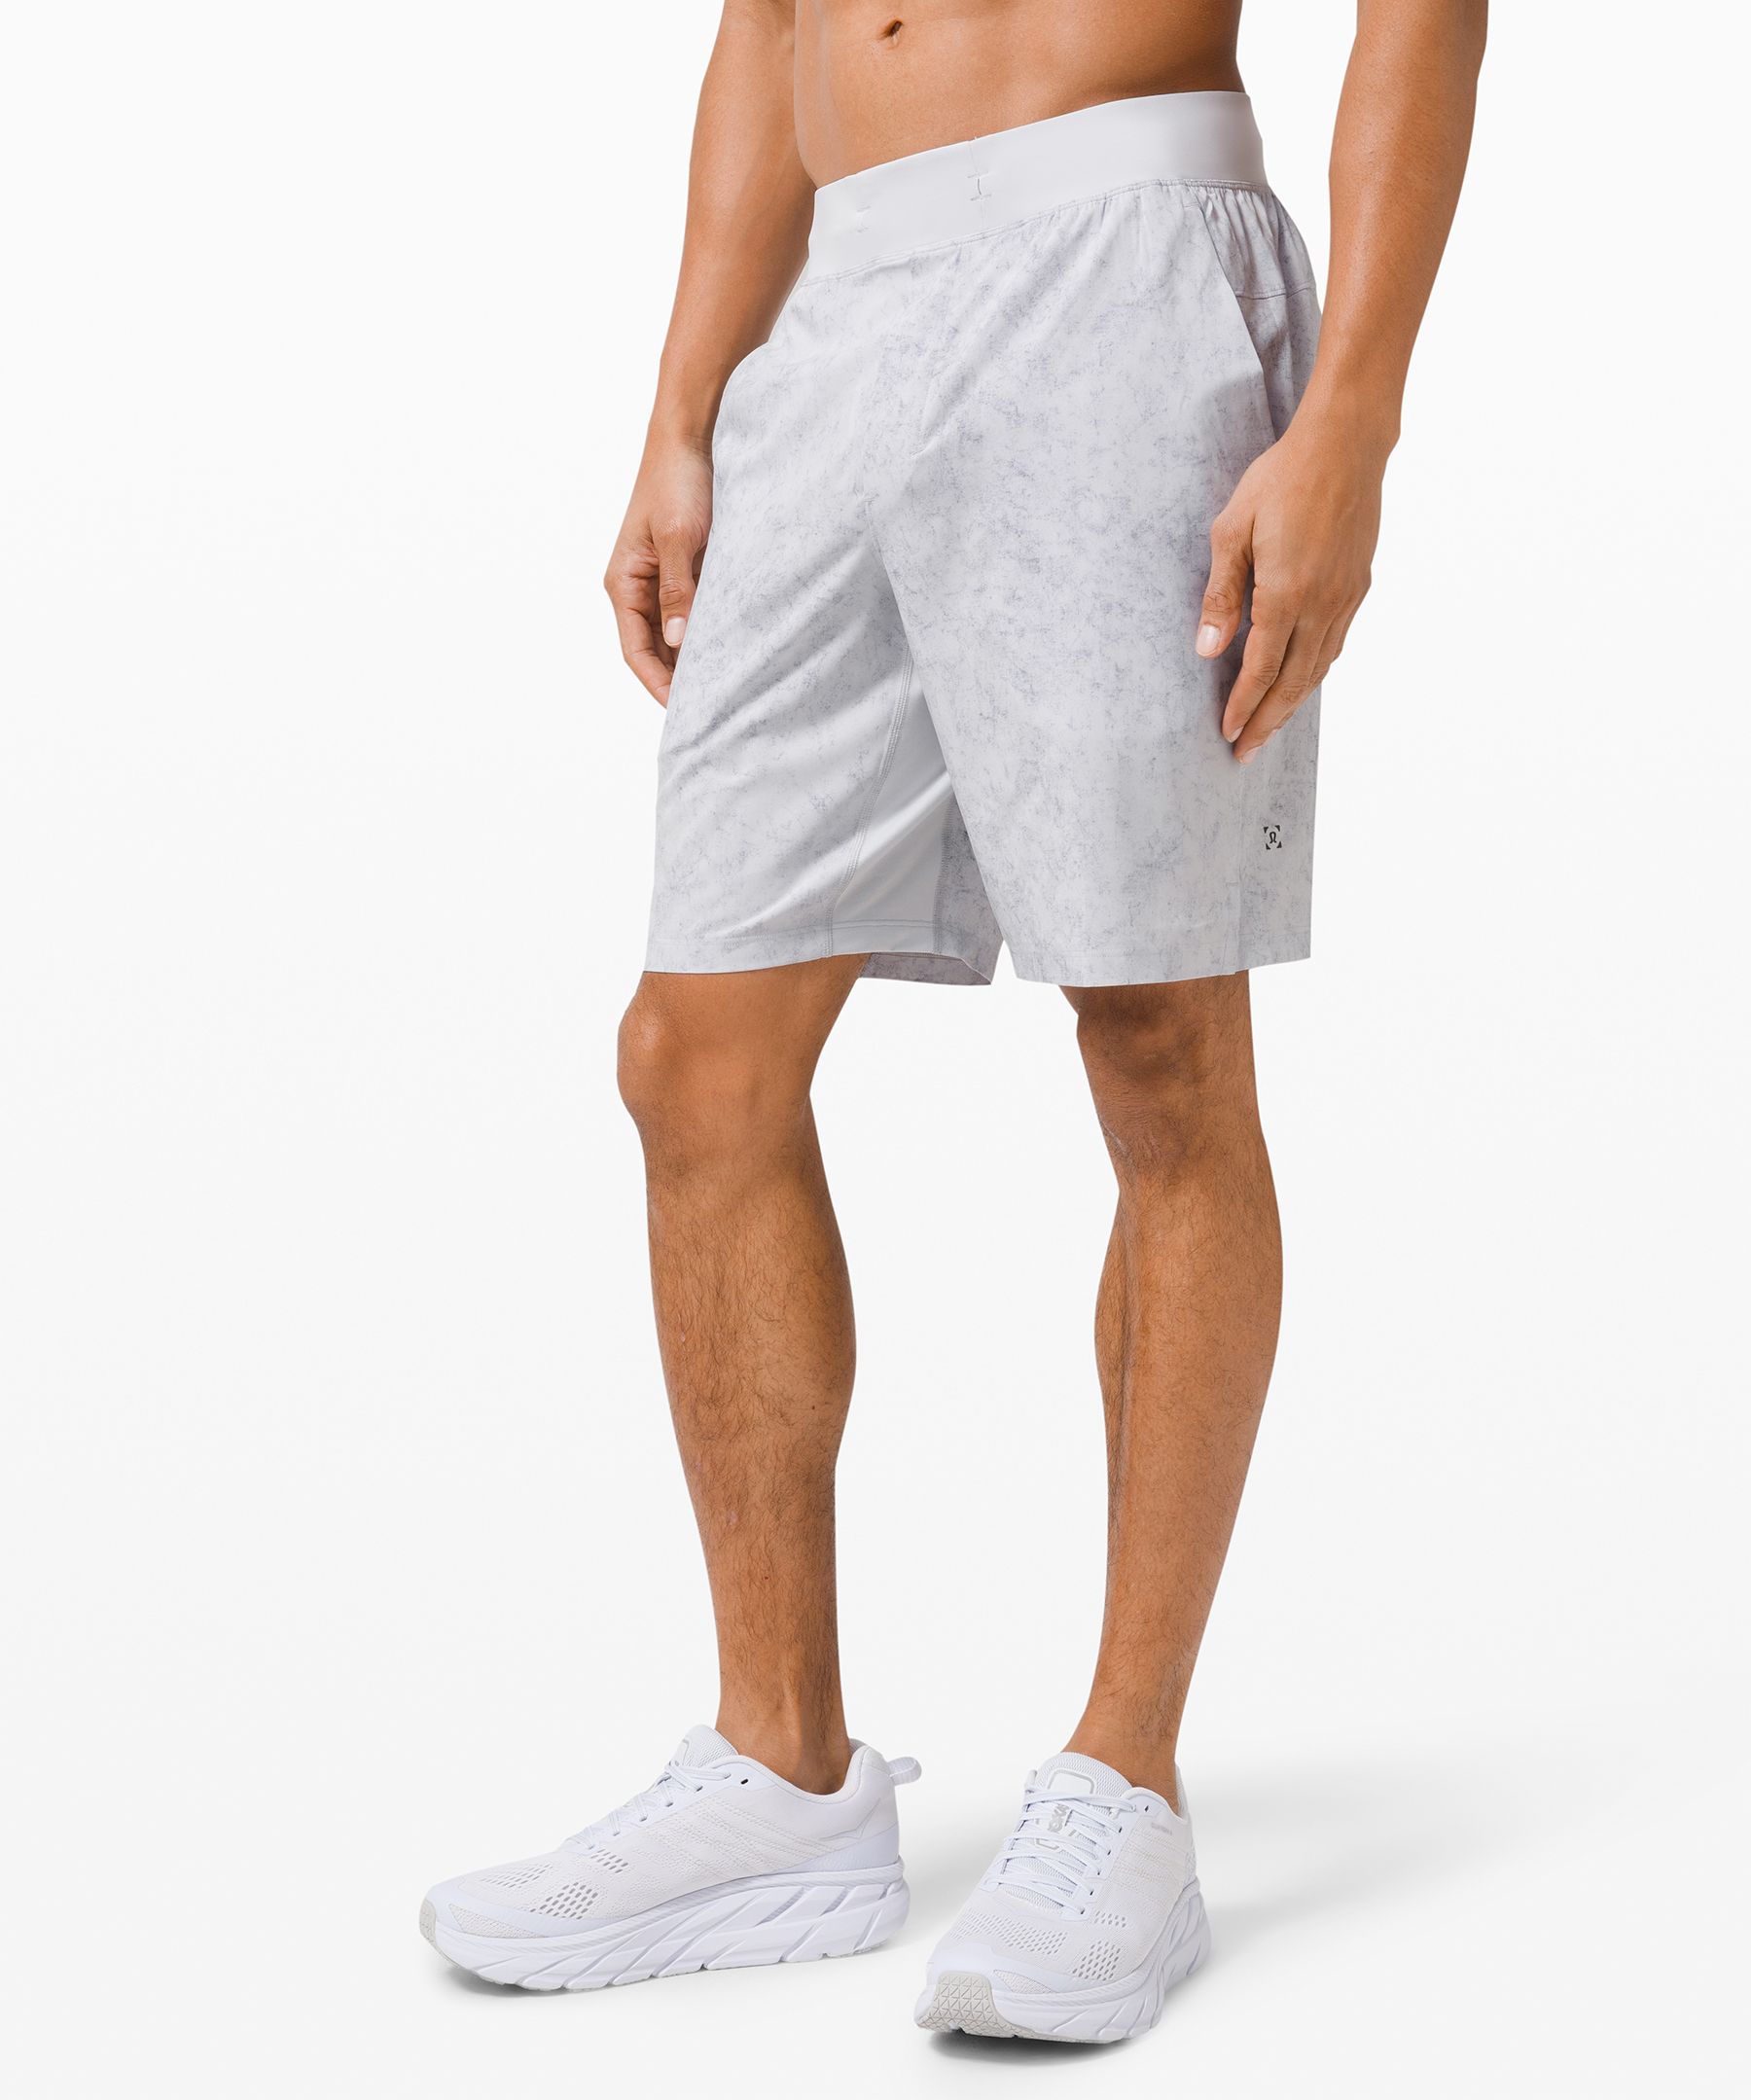 lululemon mens shorts cheap online